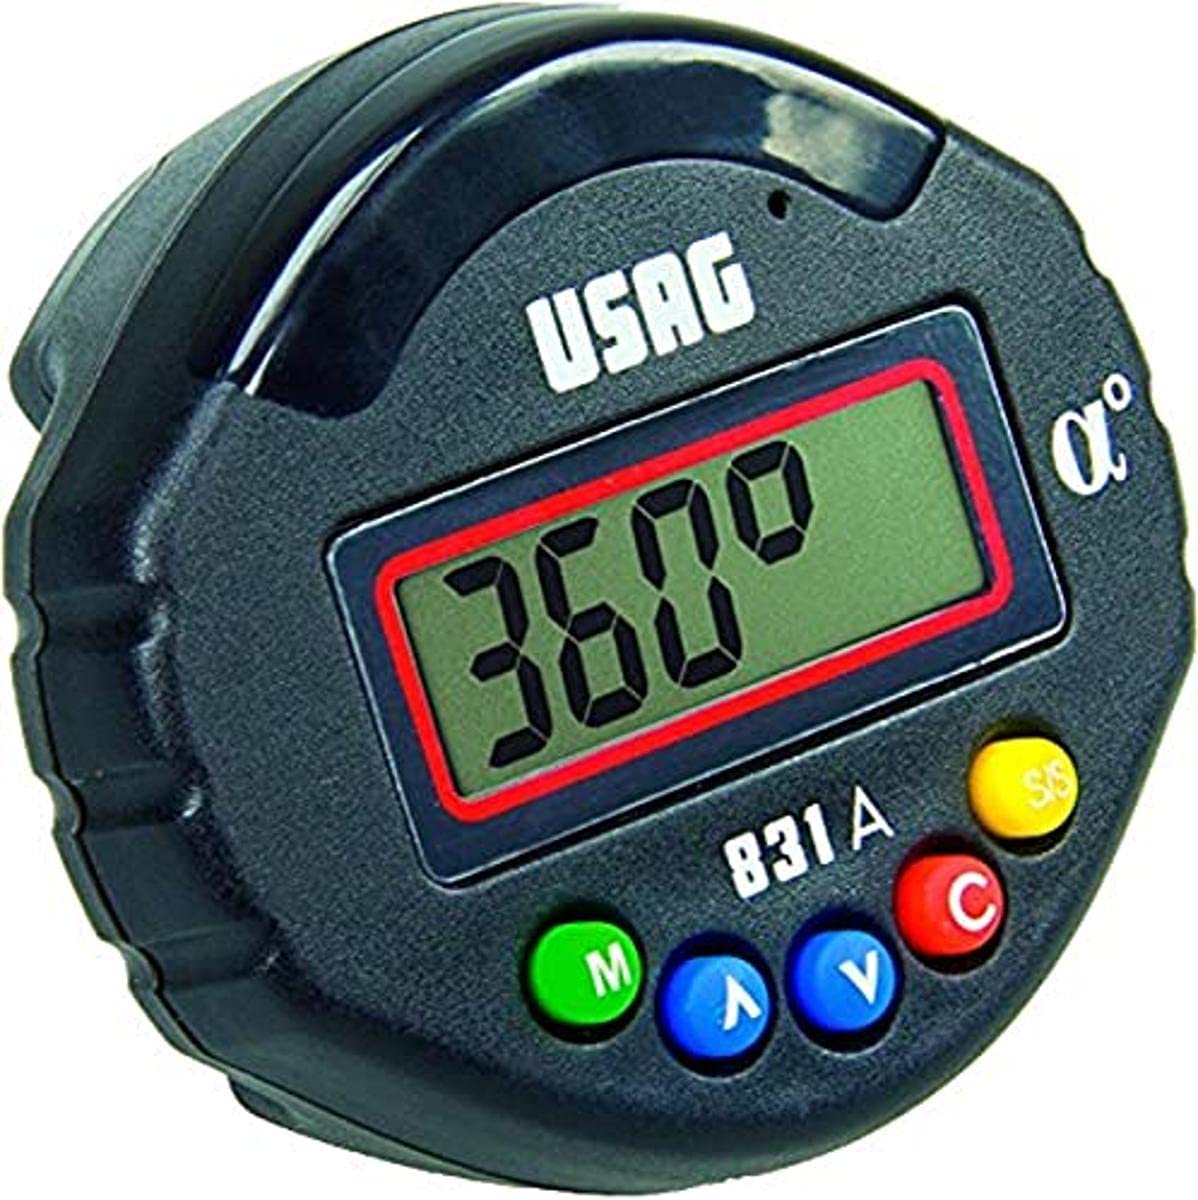 USAG 831 A - Digitales Drehwinkelmessgerät [Skala 0-360°, Auflösung 0,1°]